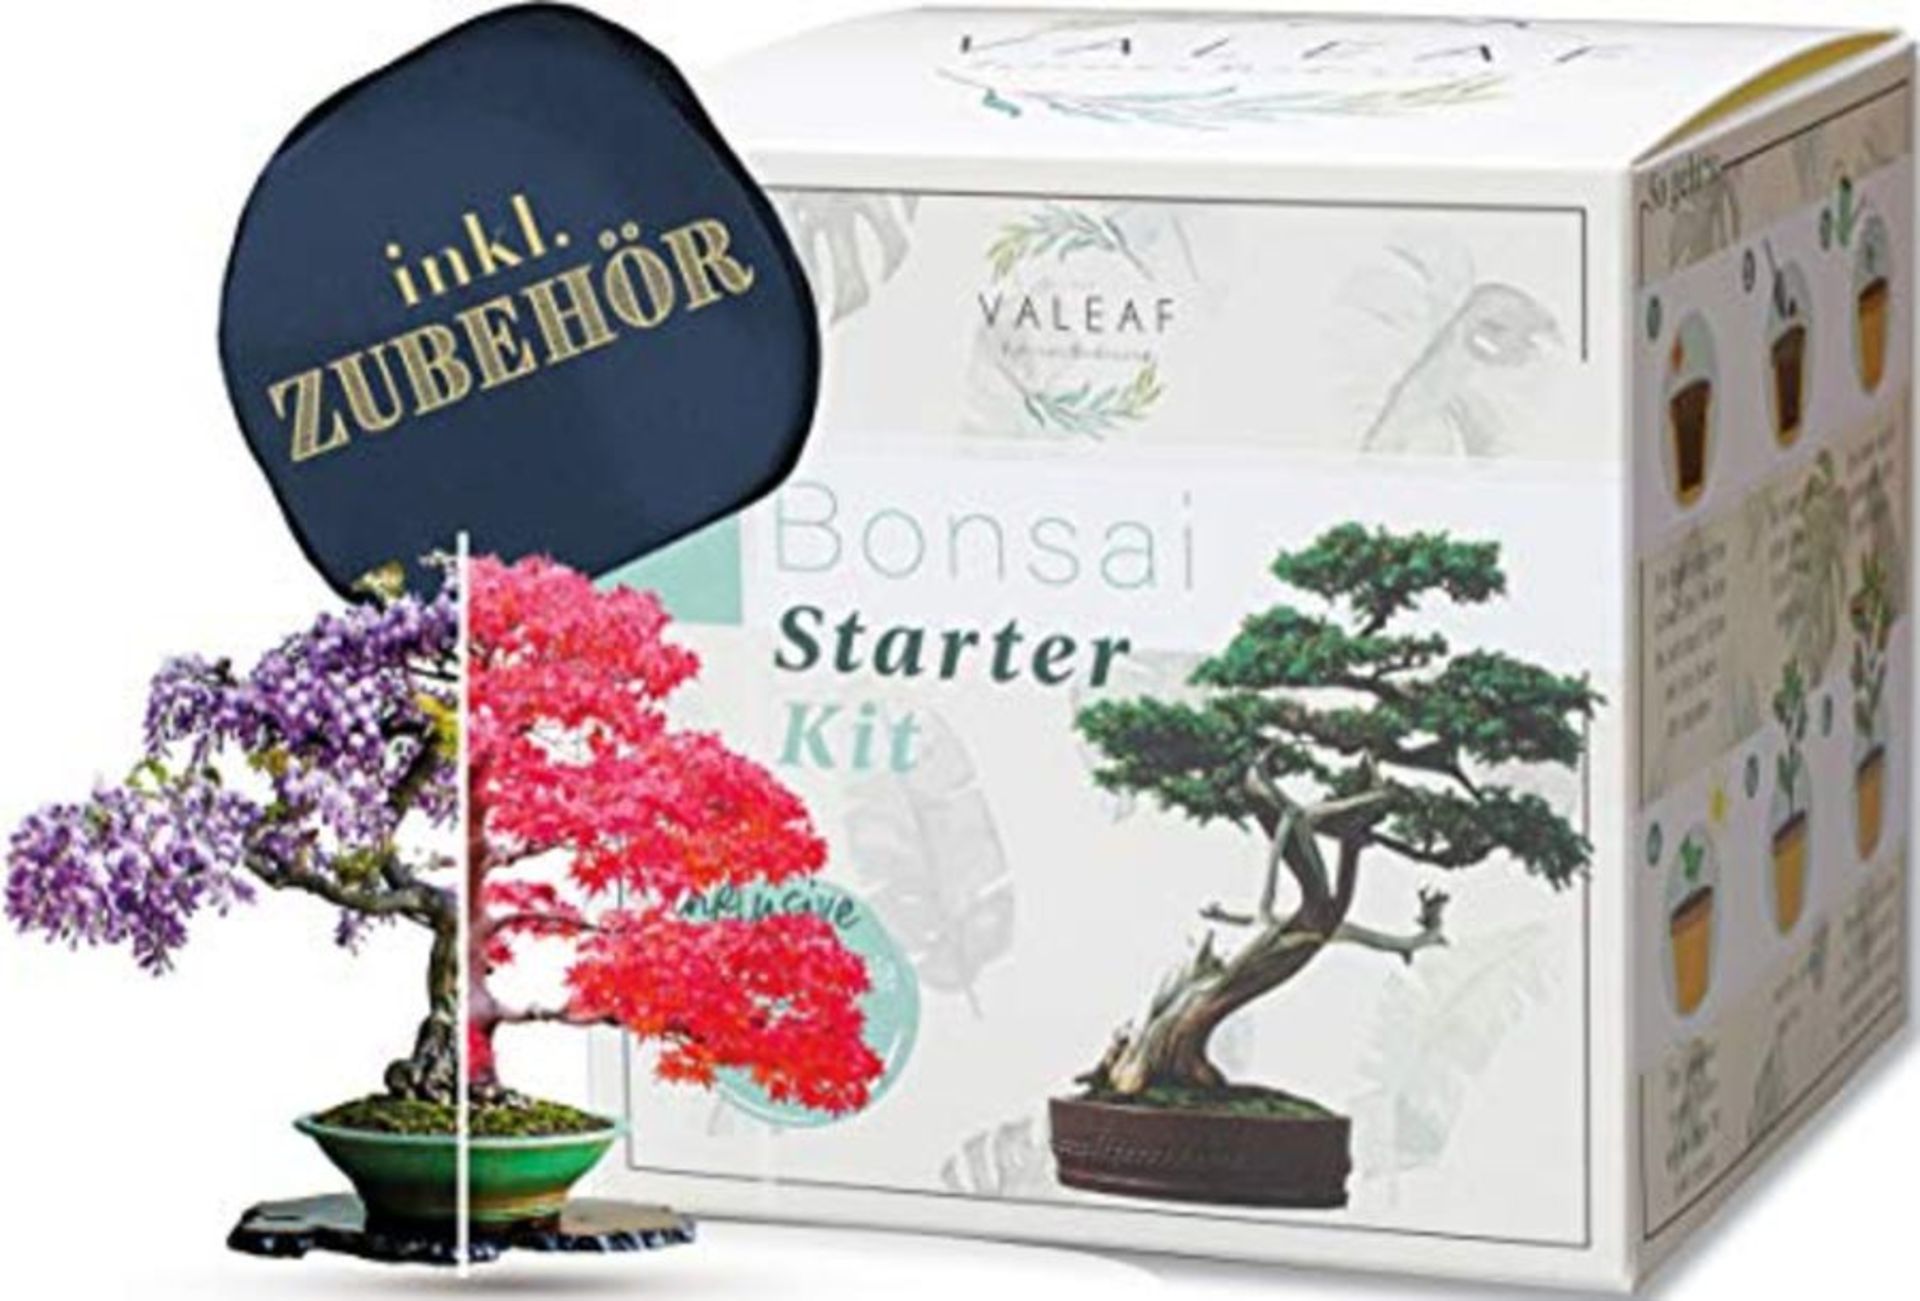 Valeaf Bonsai Starter Kit - Summer Sale, Grow Your Own Bonsai Tree - Growing Set Inclu